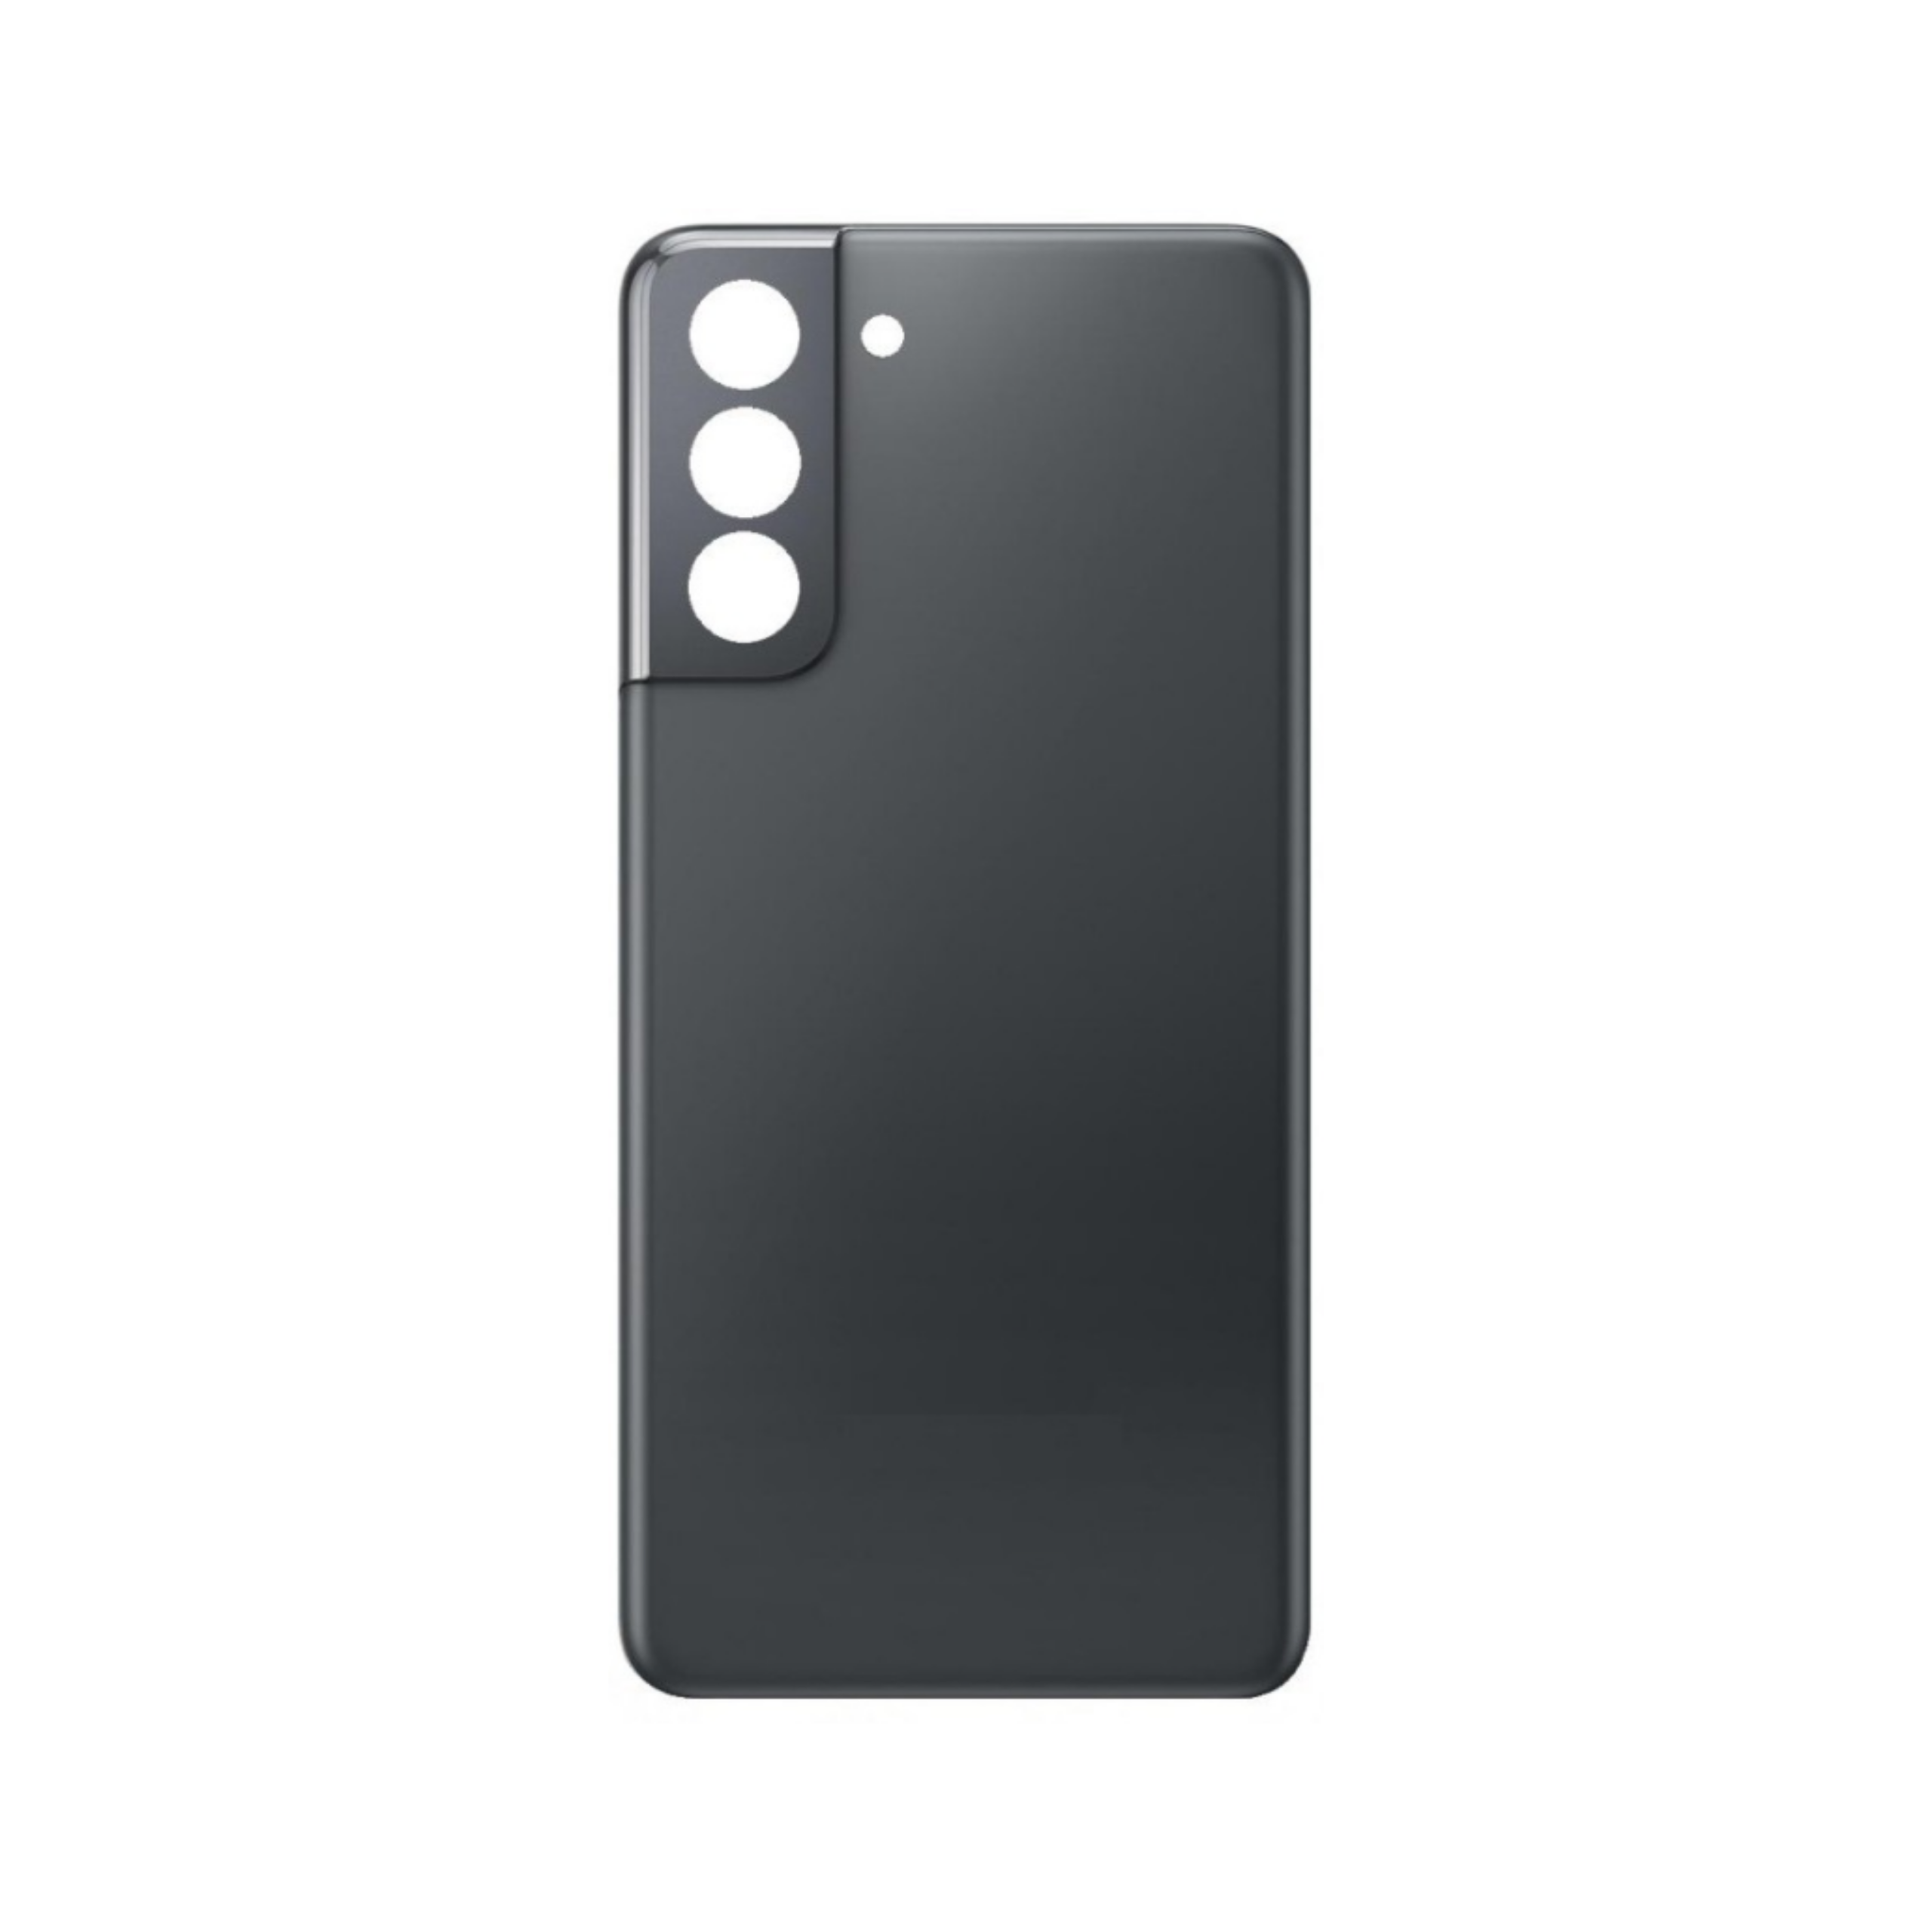 Back Door with Camera Lens for Samsung Galaxy S21 5G Phantom Gray